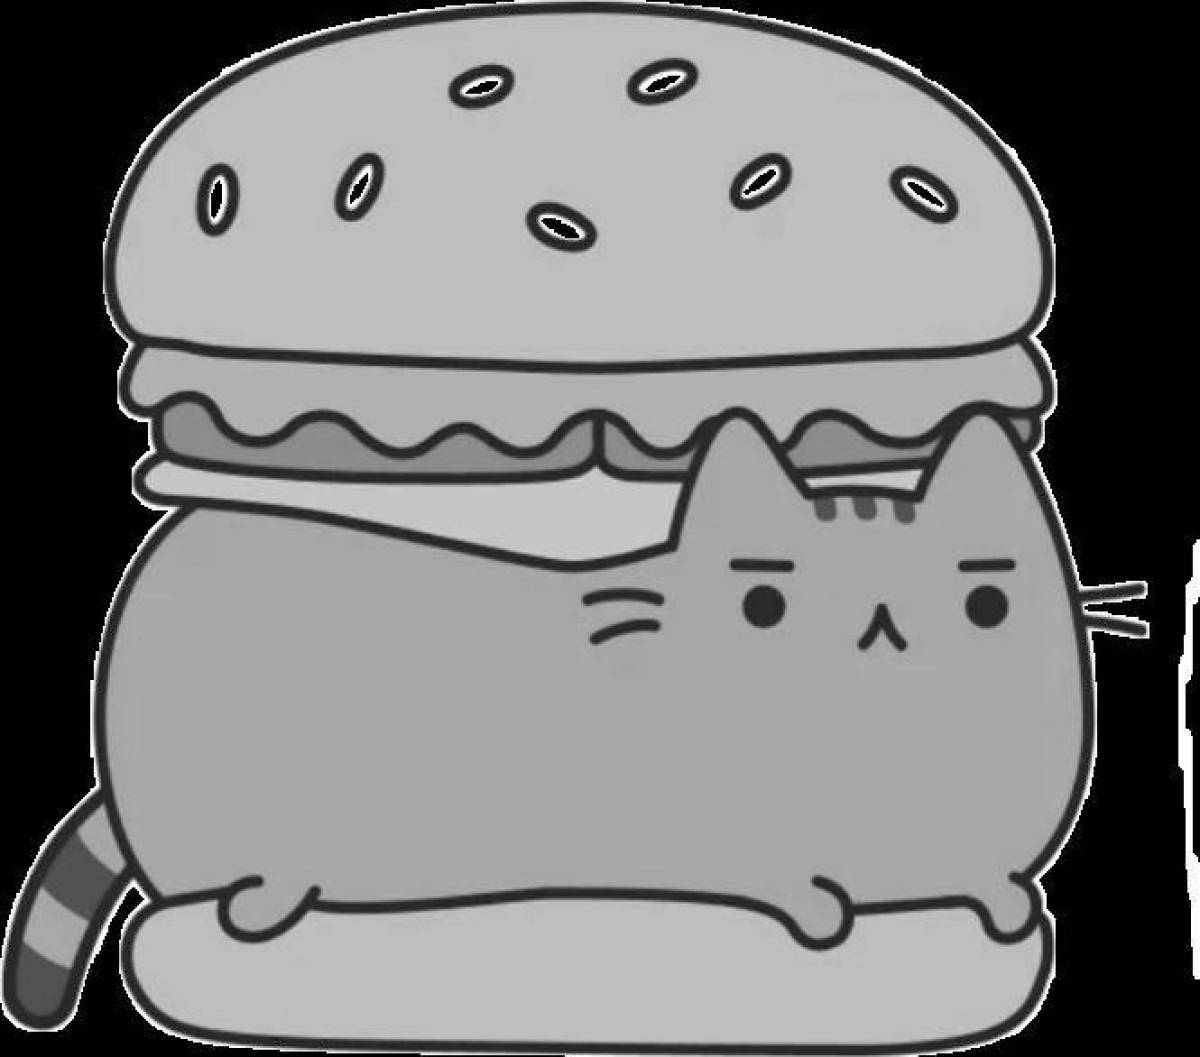 Outrageous burger cat coloring page